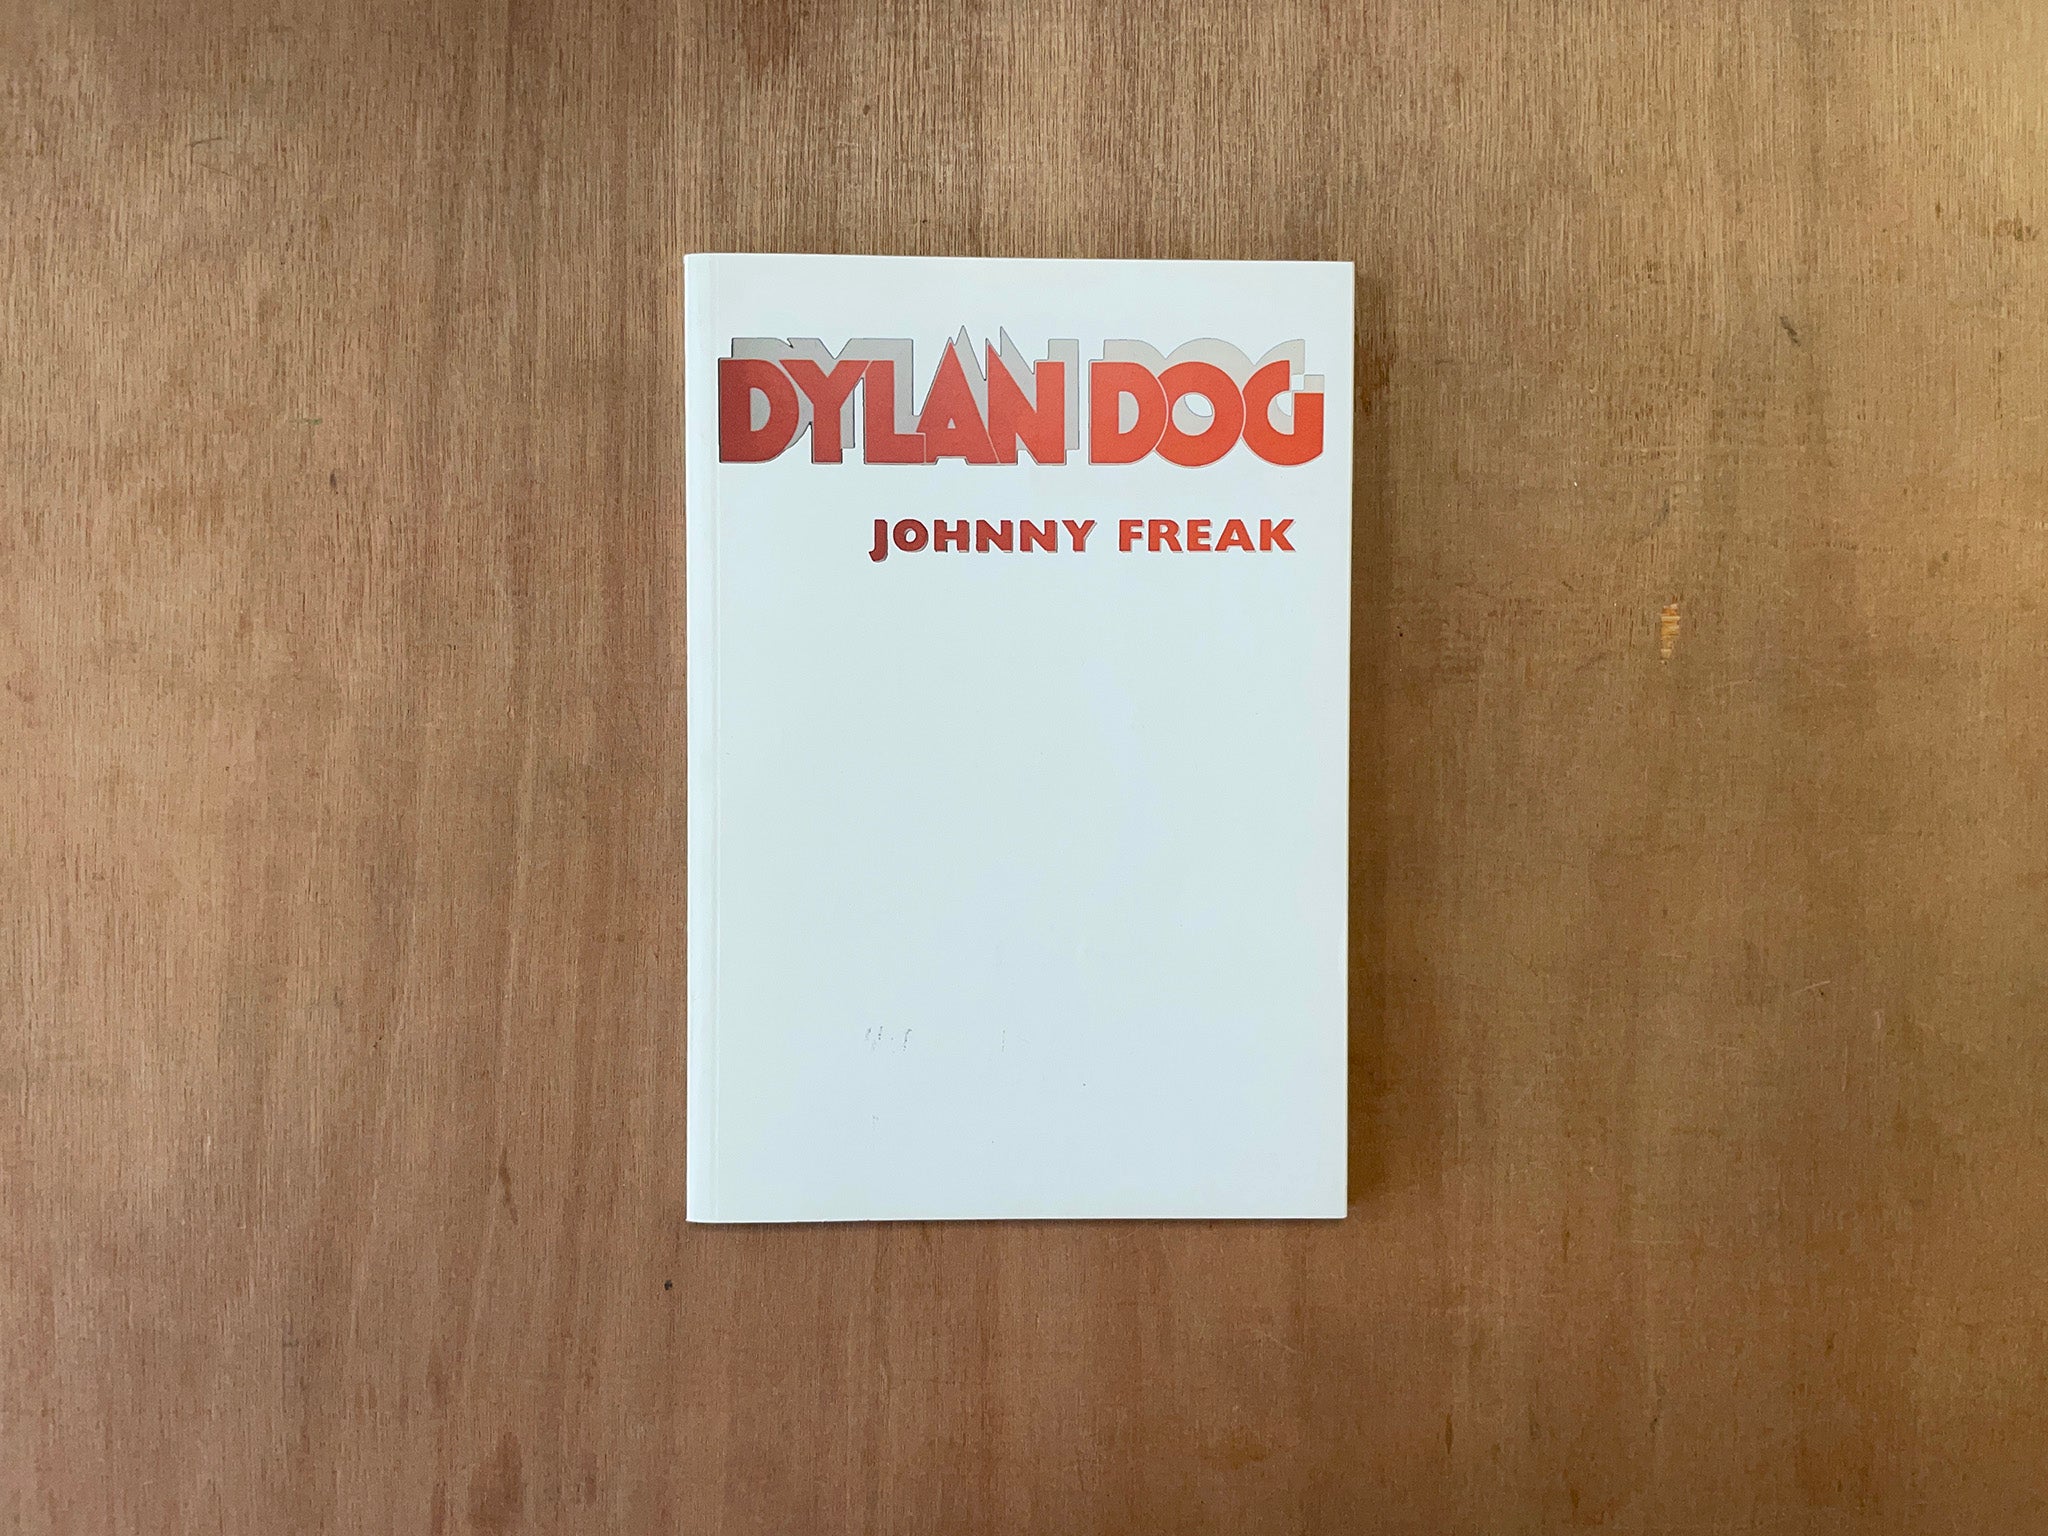 DYLAN DOG - VOL. 8 JOHNNY FREAK by Adnan Balet Balcinovic